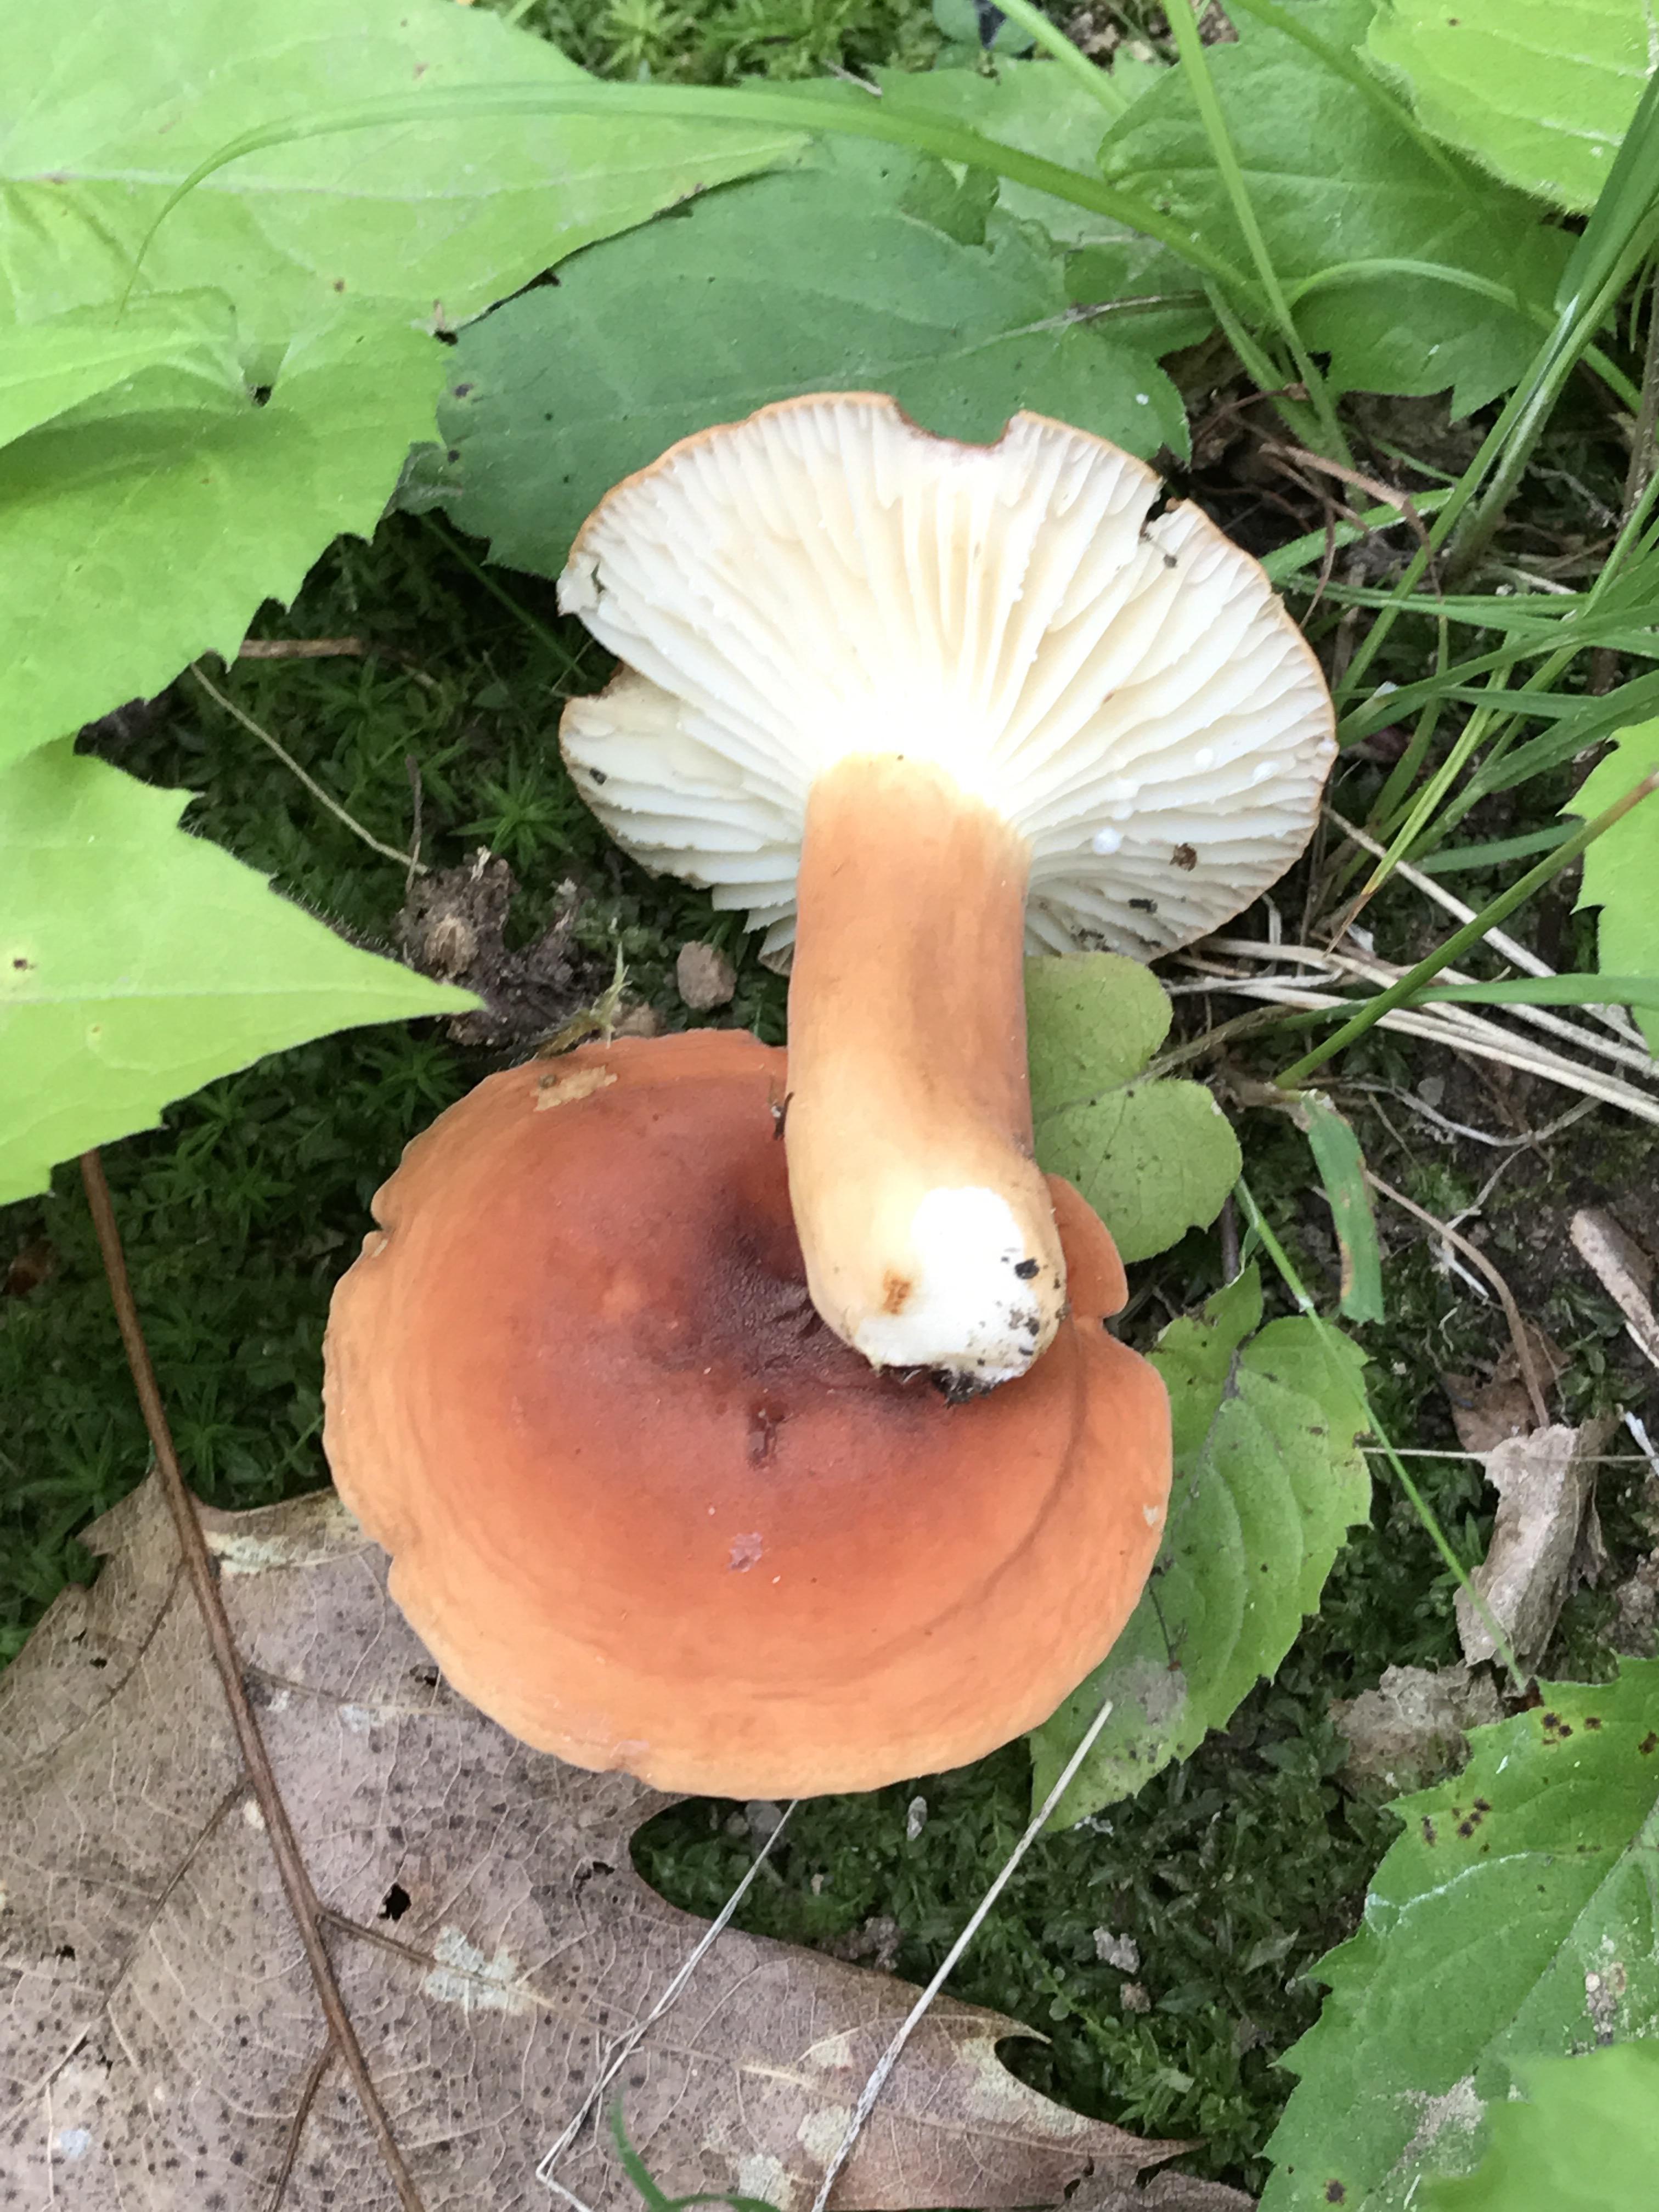 Picture of a Orange Milky Lactifluus hygrophoroides mushroom